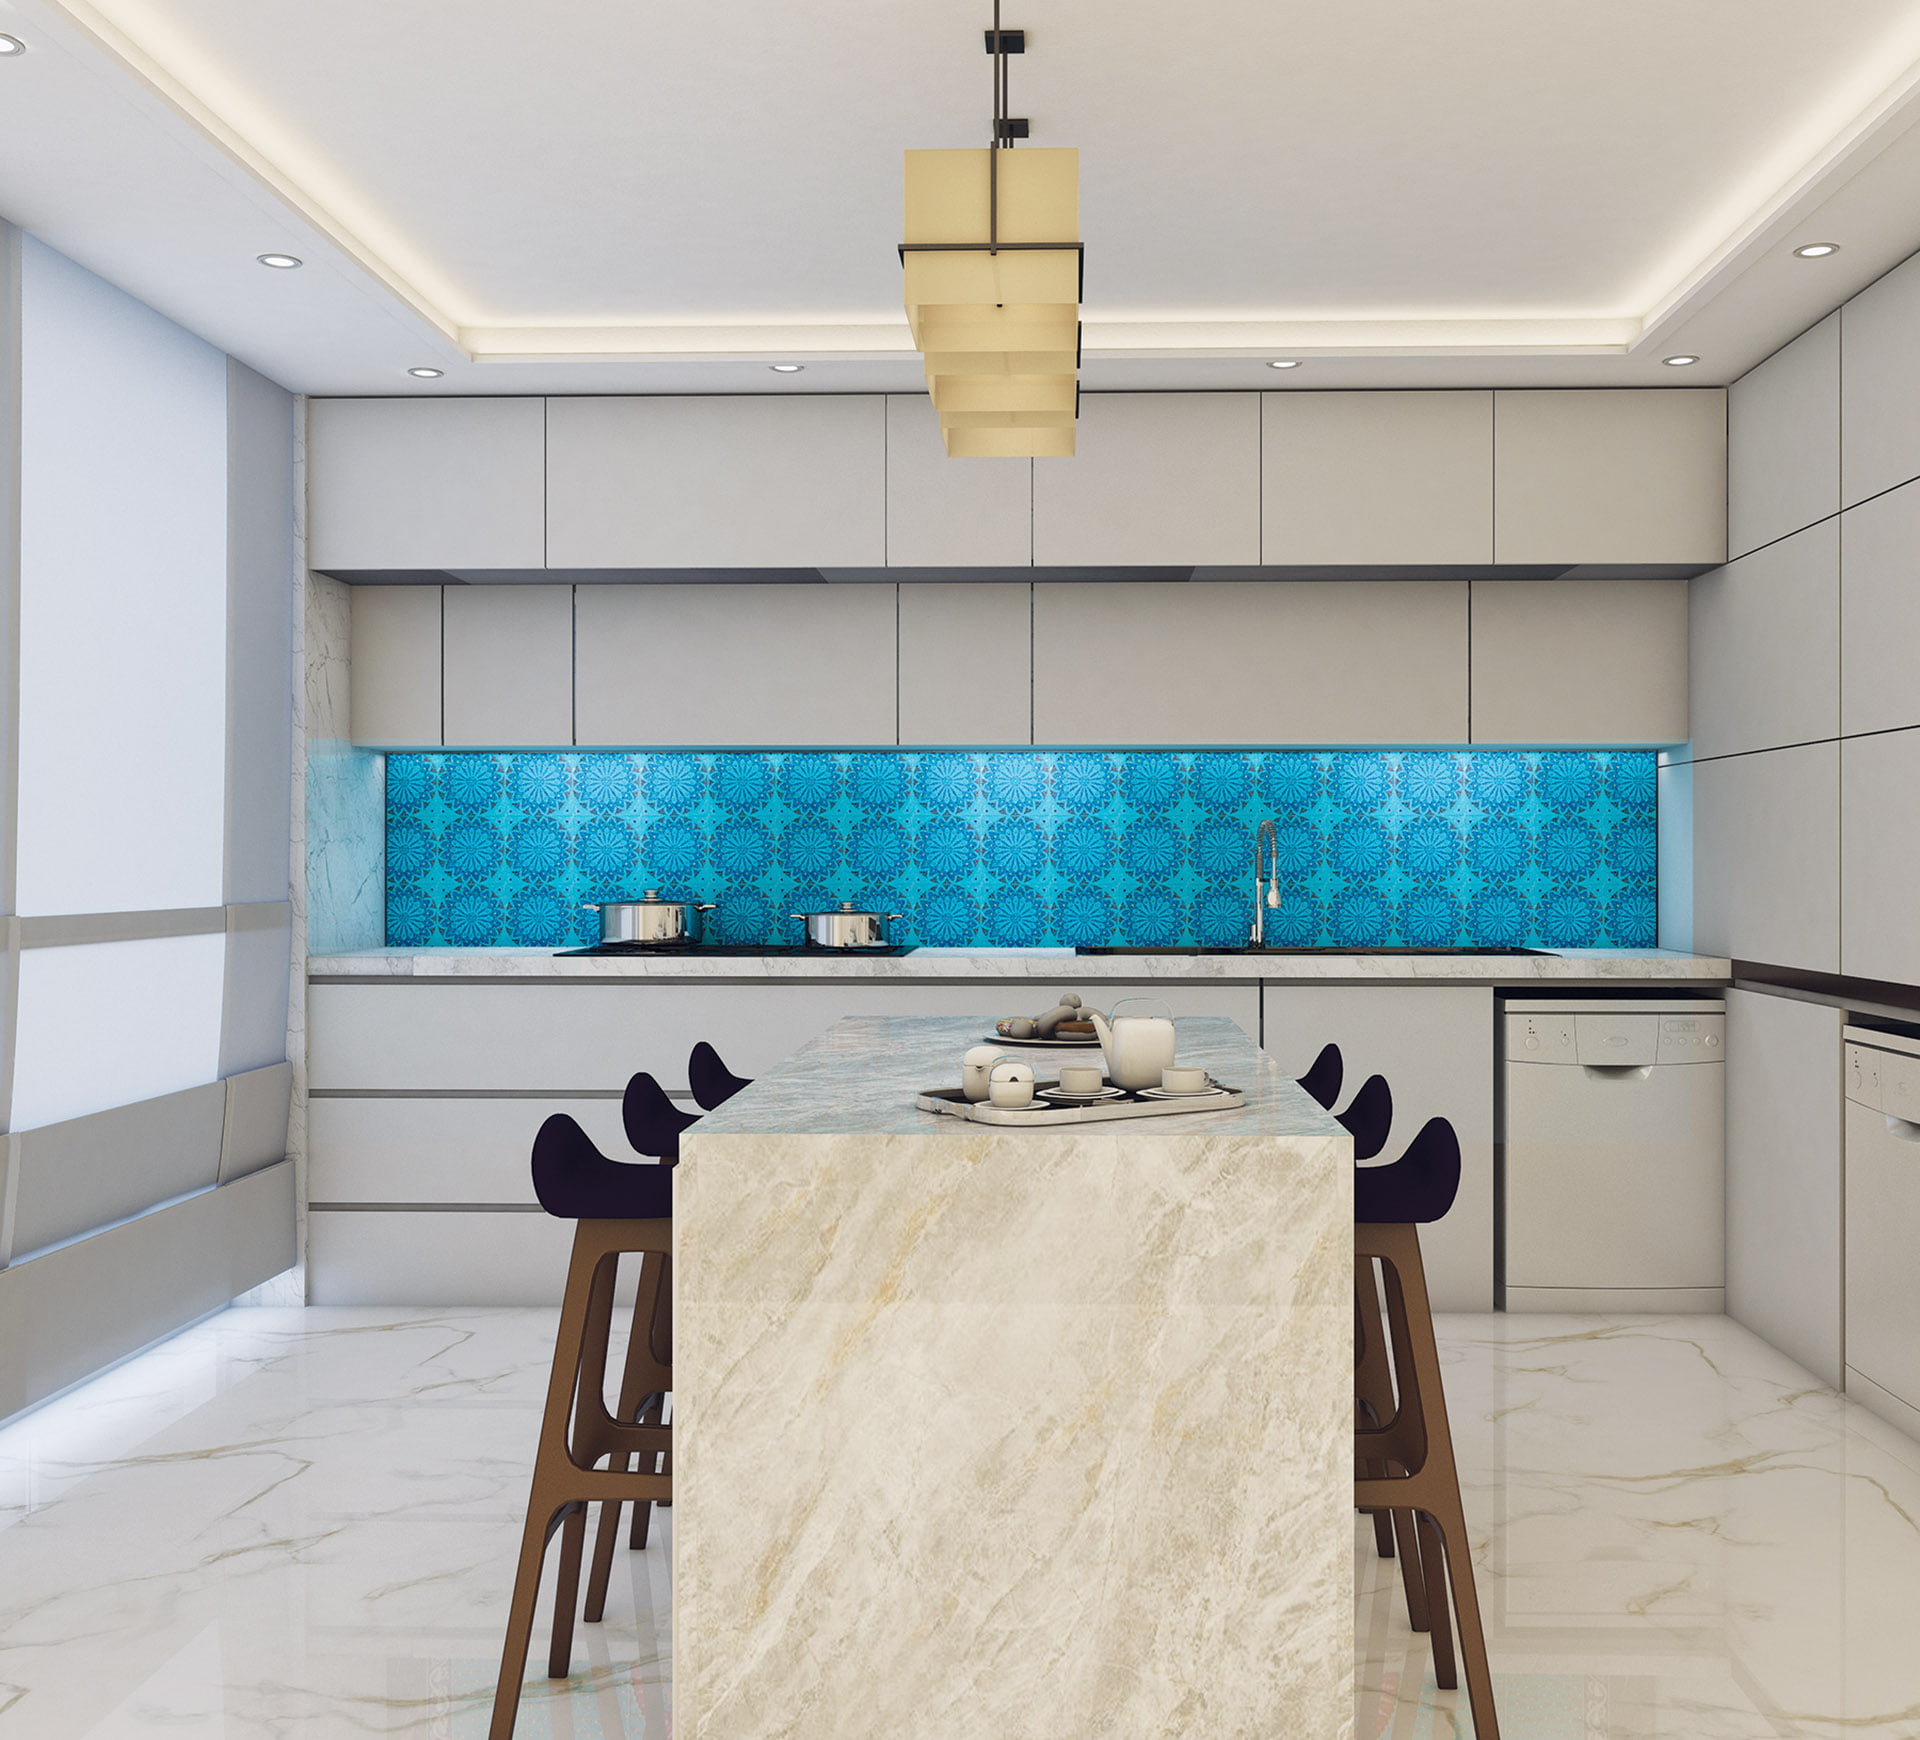 Tiles painted in turquoise sunbursts brighten a kitchen backsplash.